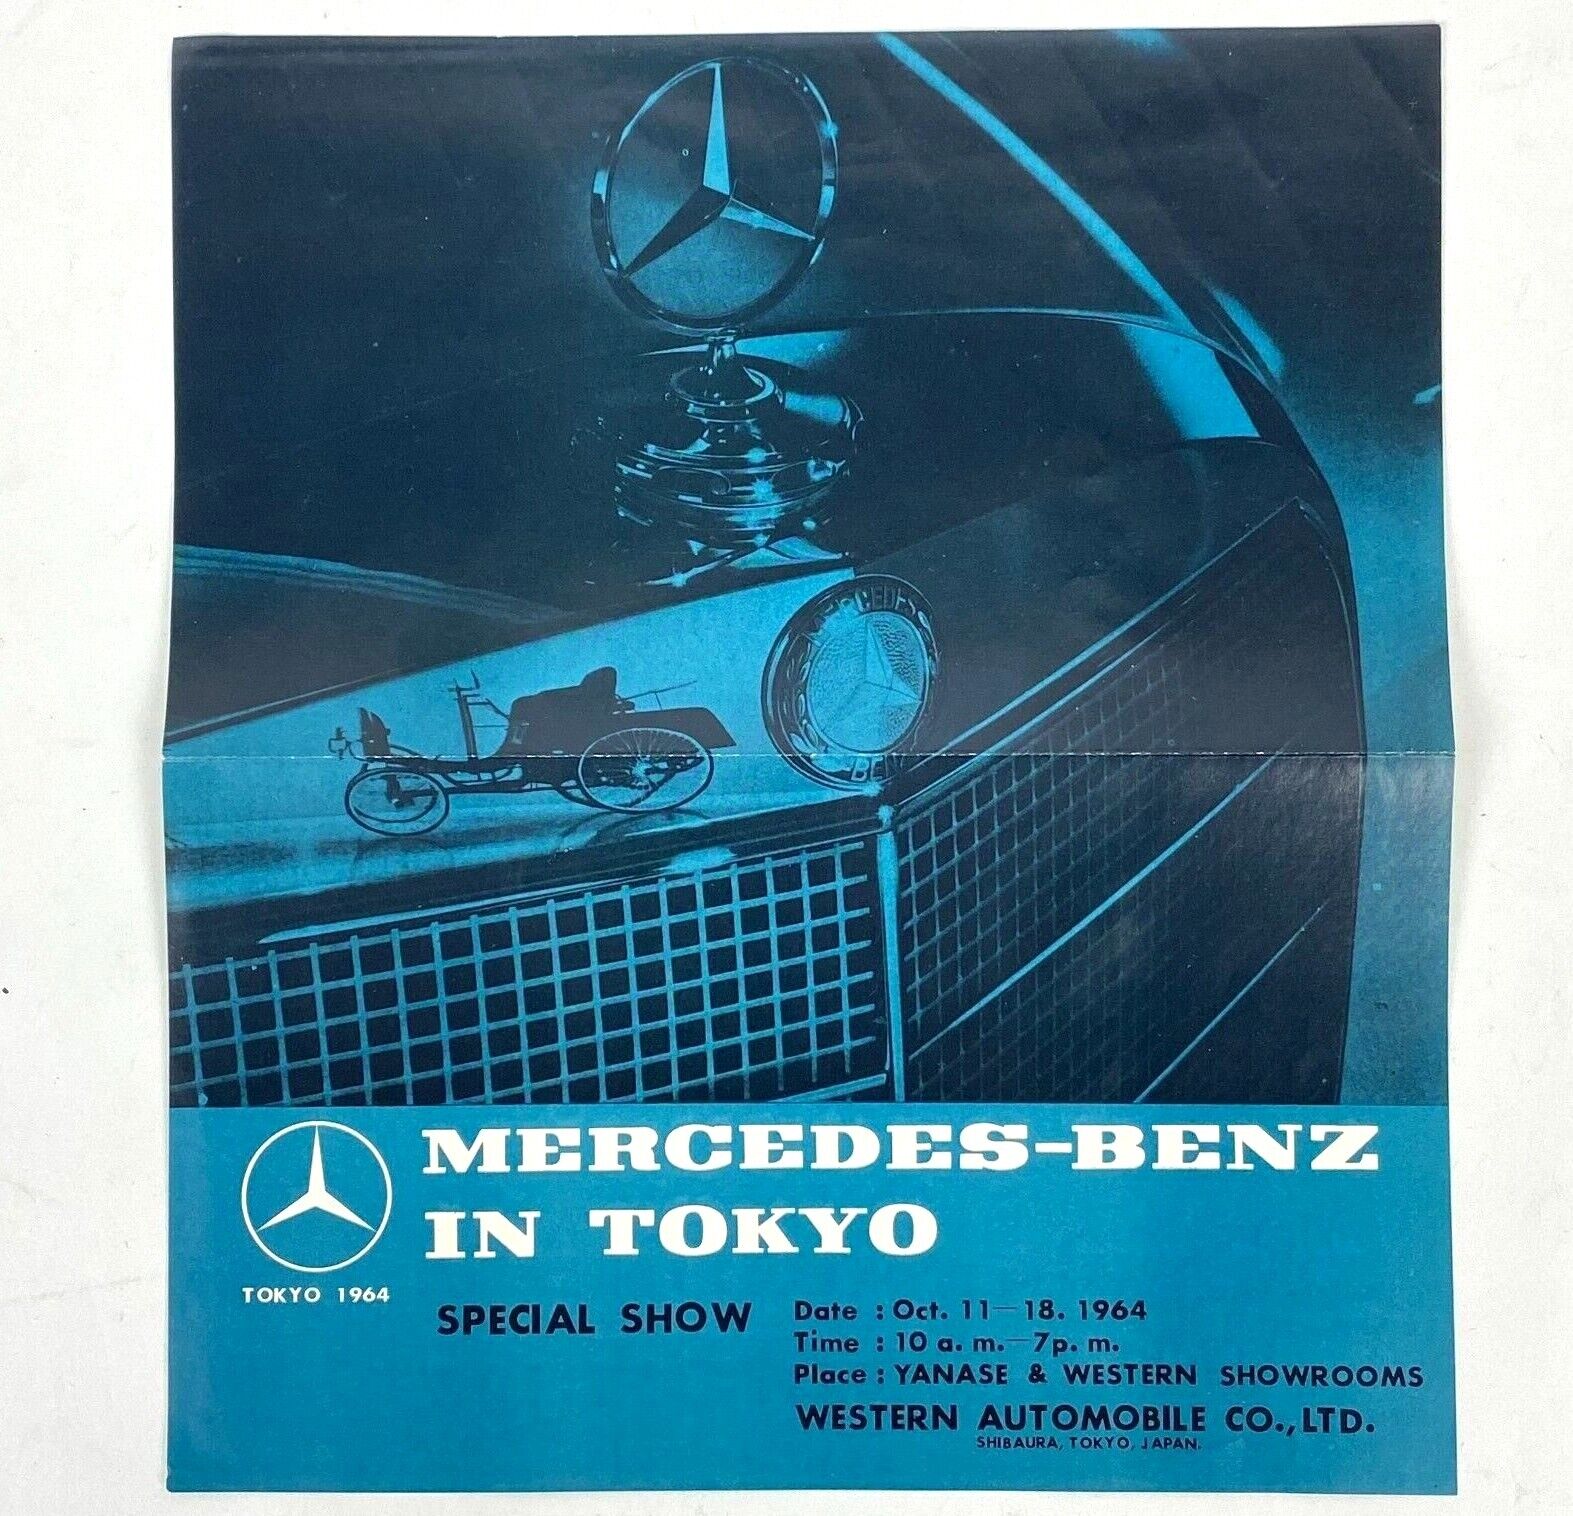 1964 Mercedes Benz Car Show Tokyo Japan by Western Automotive Brochure Advert